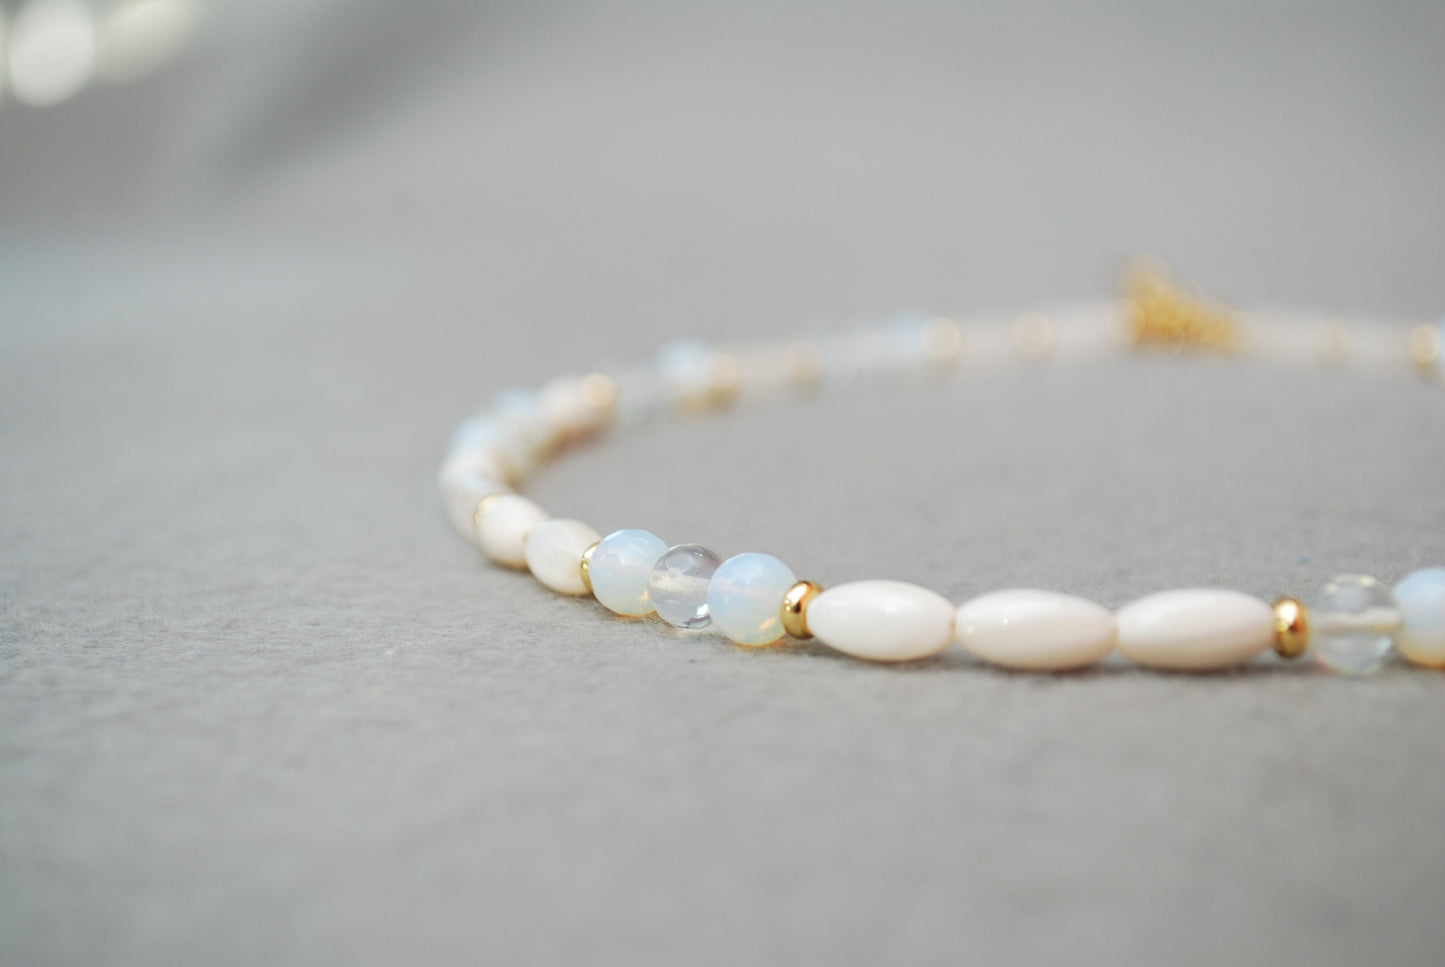 Opaline, Nacre & Quartz Beaded Gold Necklace - Elegant Handmade Wedding Jewelry with White Stones, 15in Length (+2" Extender)